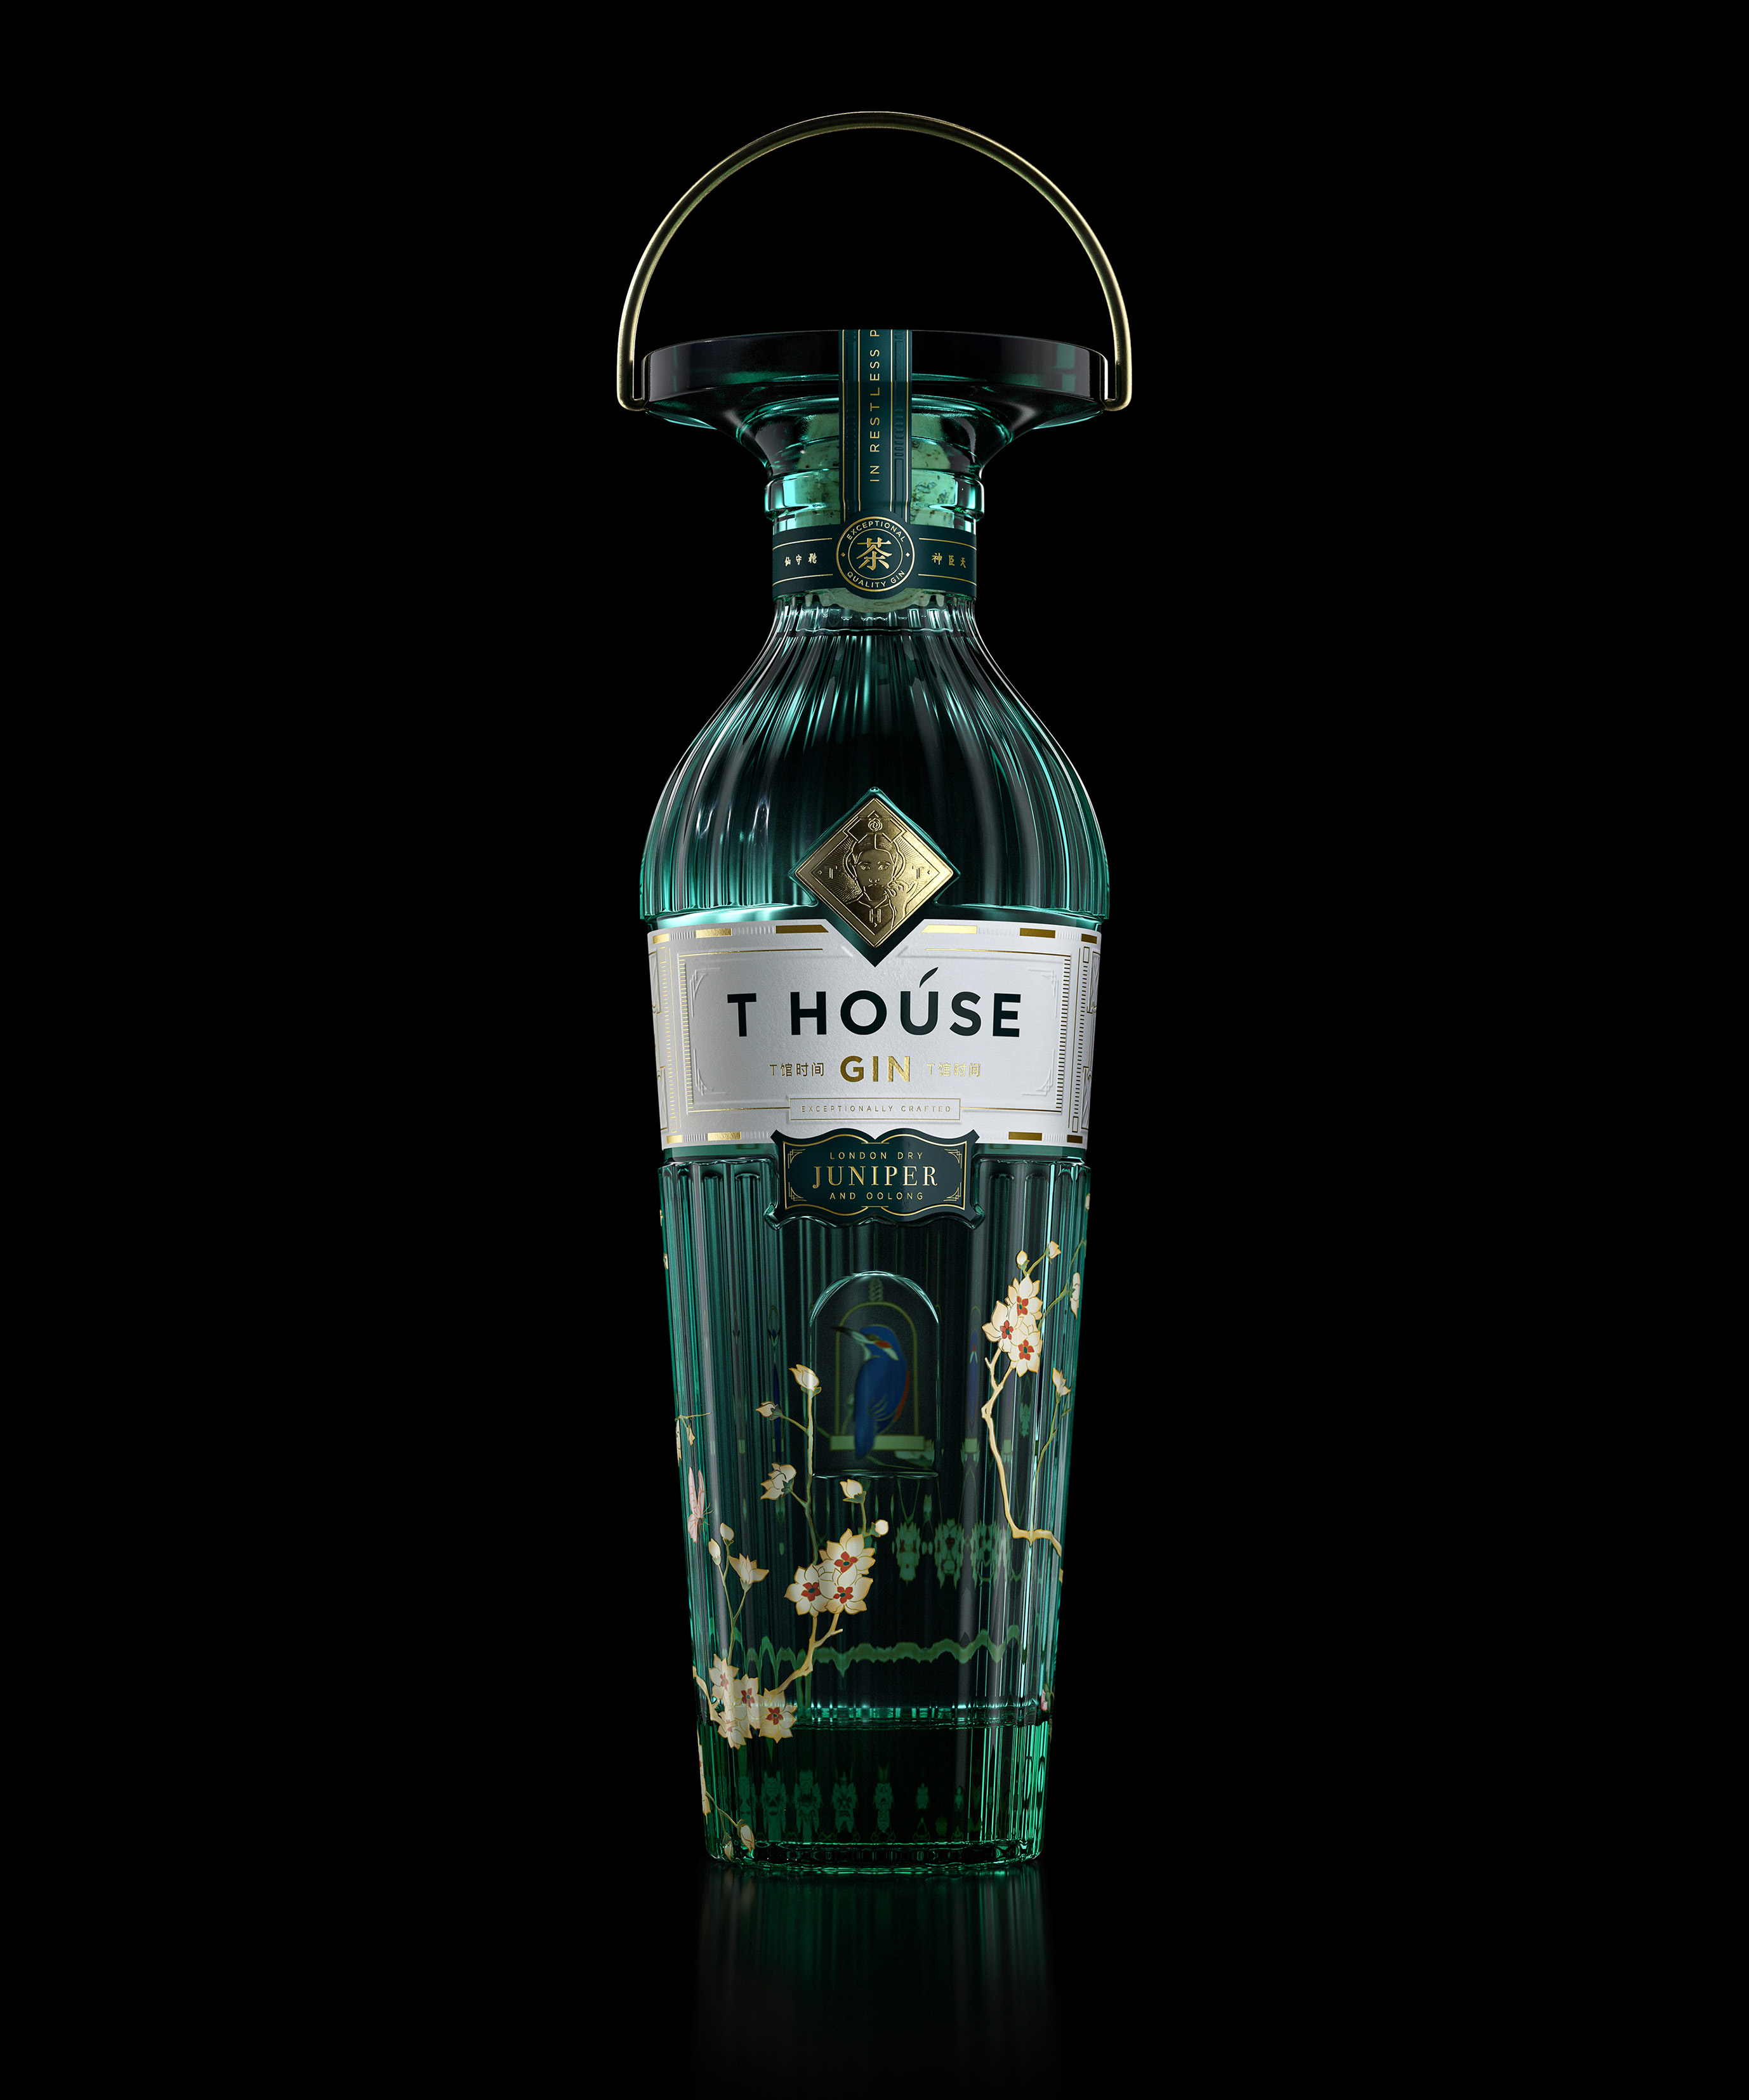 T House Gin, a Super Premium Spirit Designed by Intertype Studio